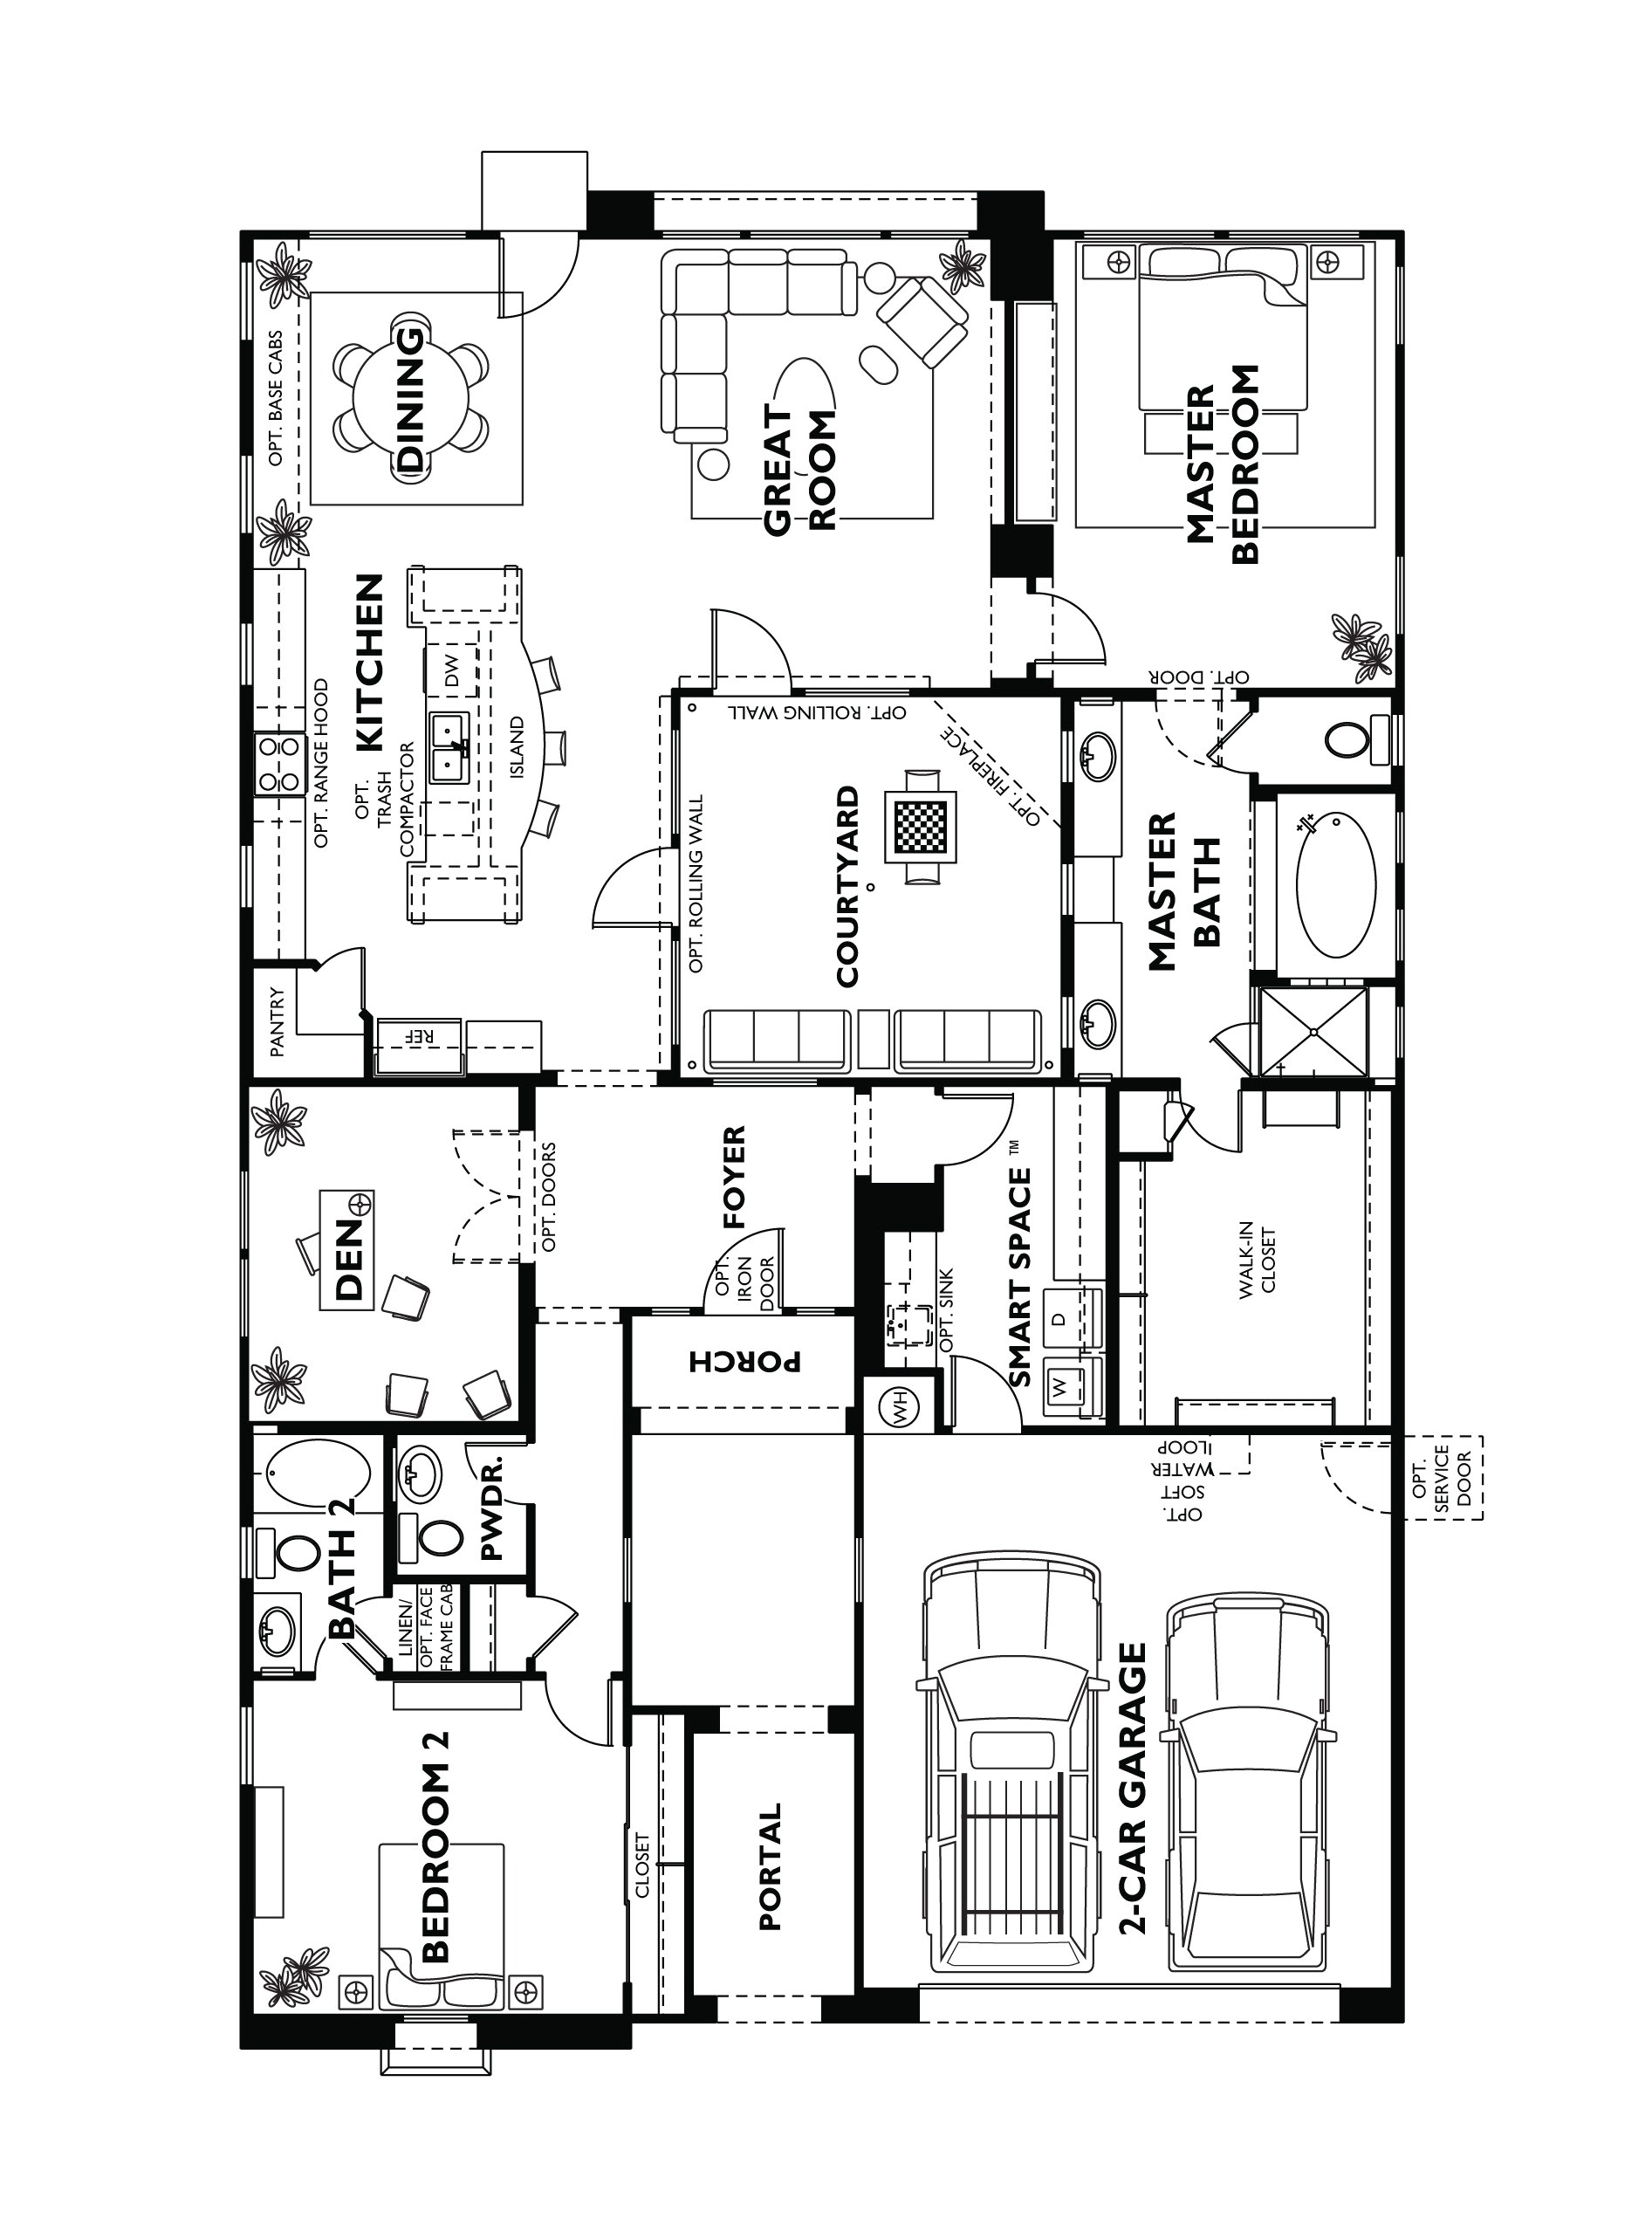 Model House Design with Floor Plan Trilogy at Vistancia Positano Floor Plan Model Home Shea